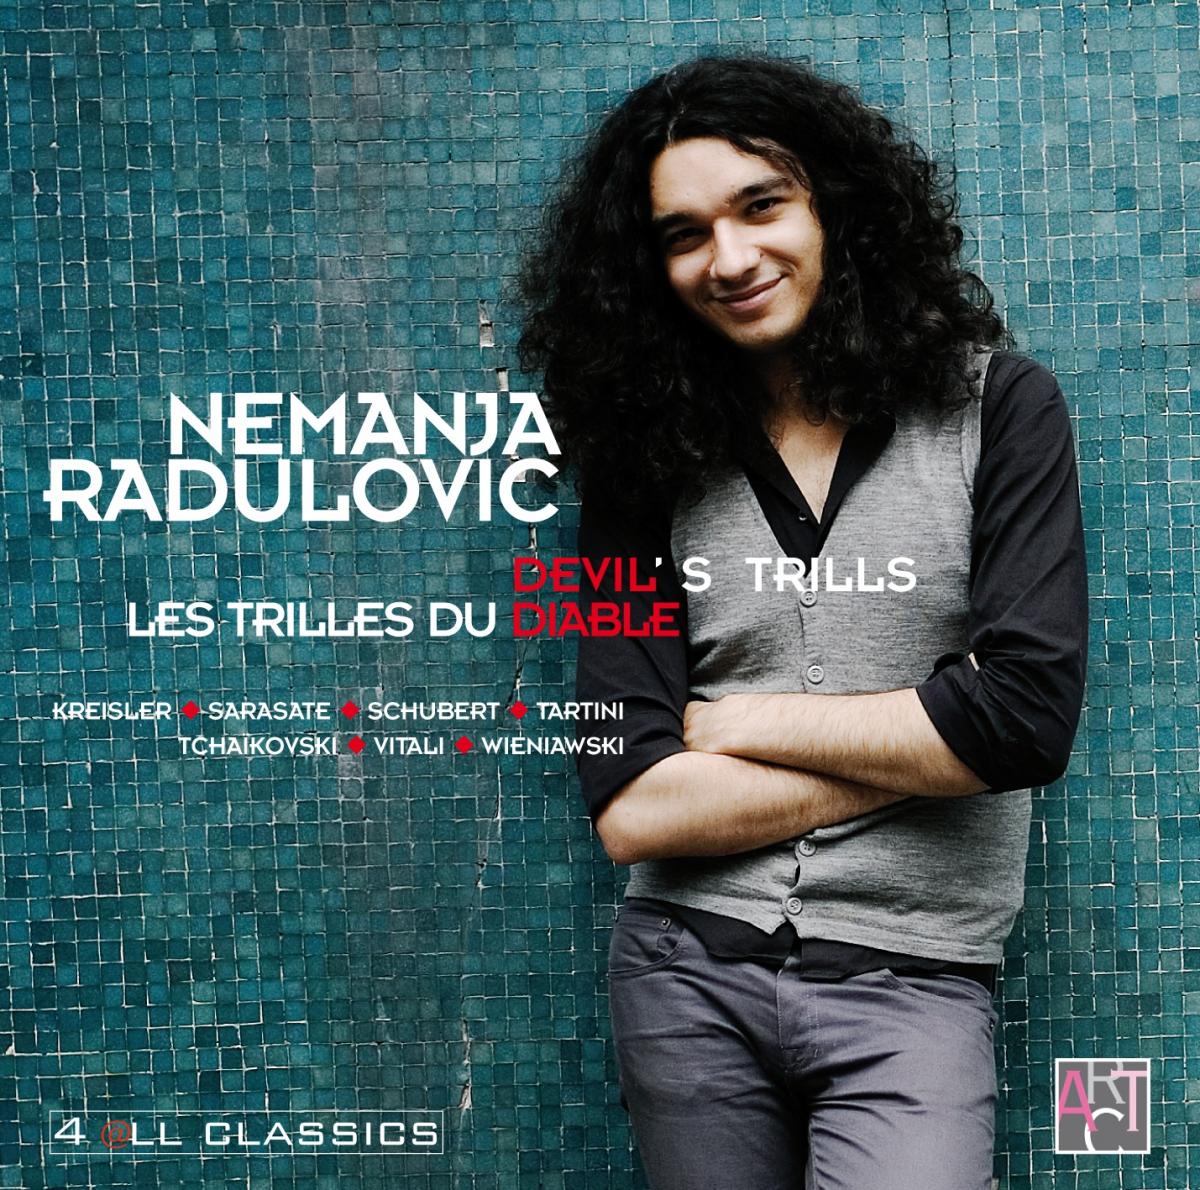 Nemanja Radulovic, Les Trilles du Diable AR001